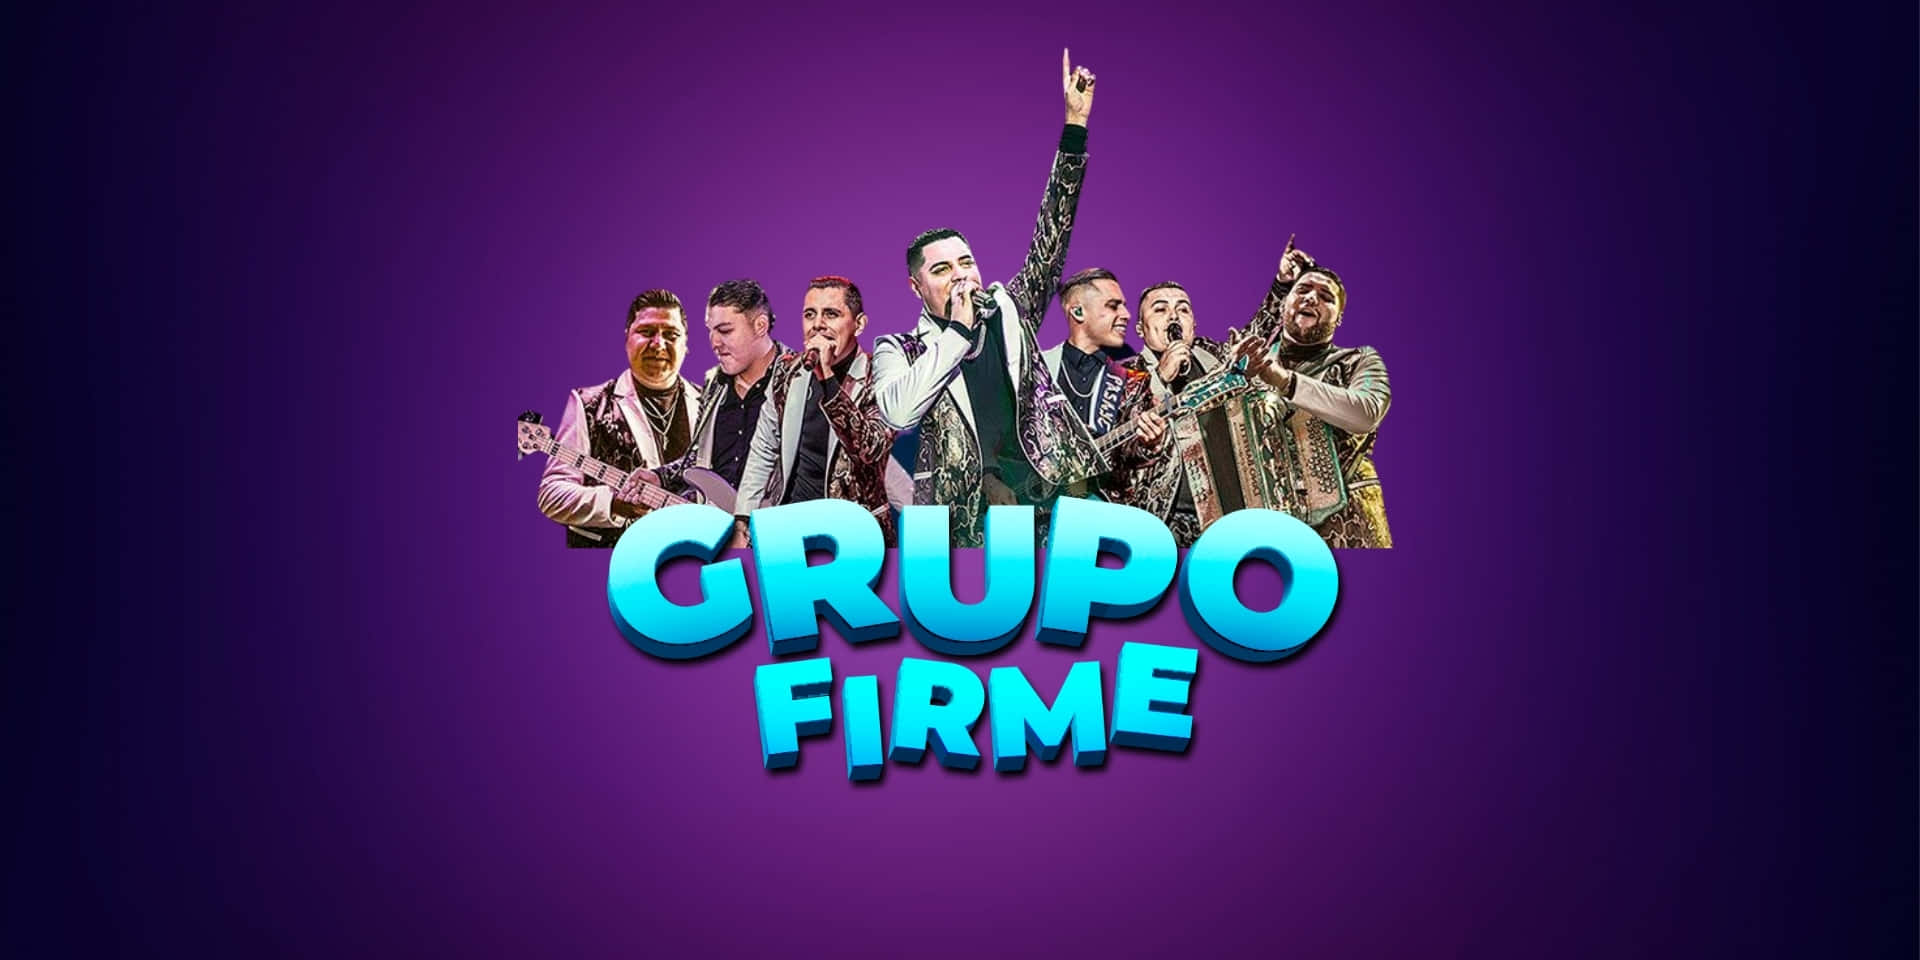 Grupofirme Te Trae La Mejor Música Regional Mexicana Fondo de pantalla